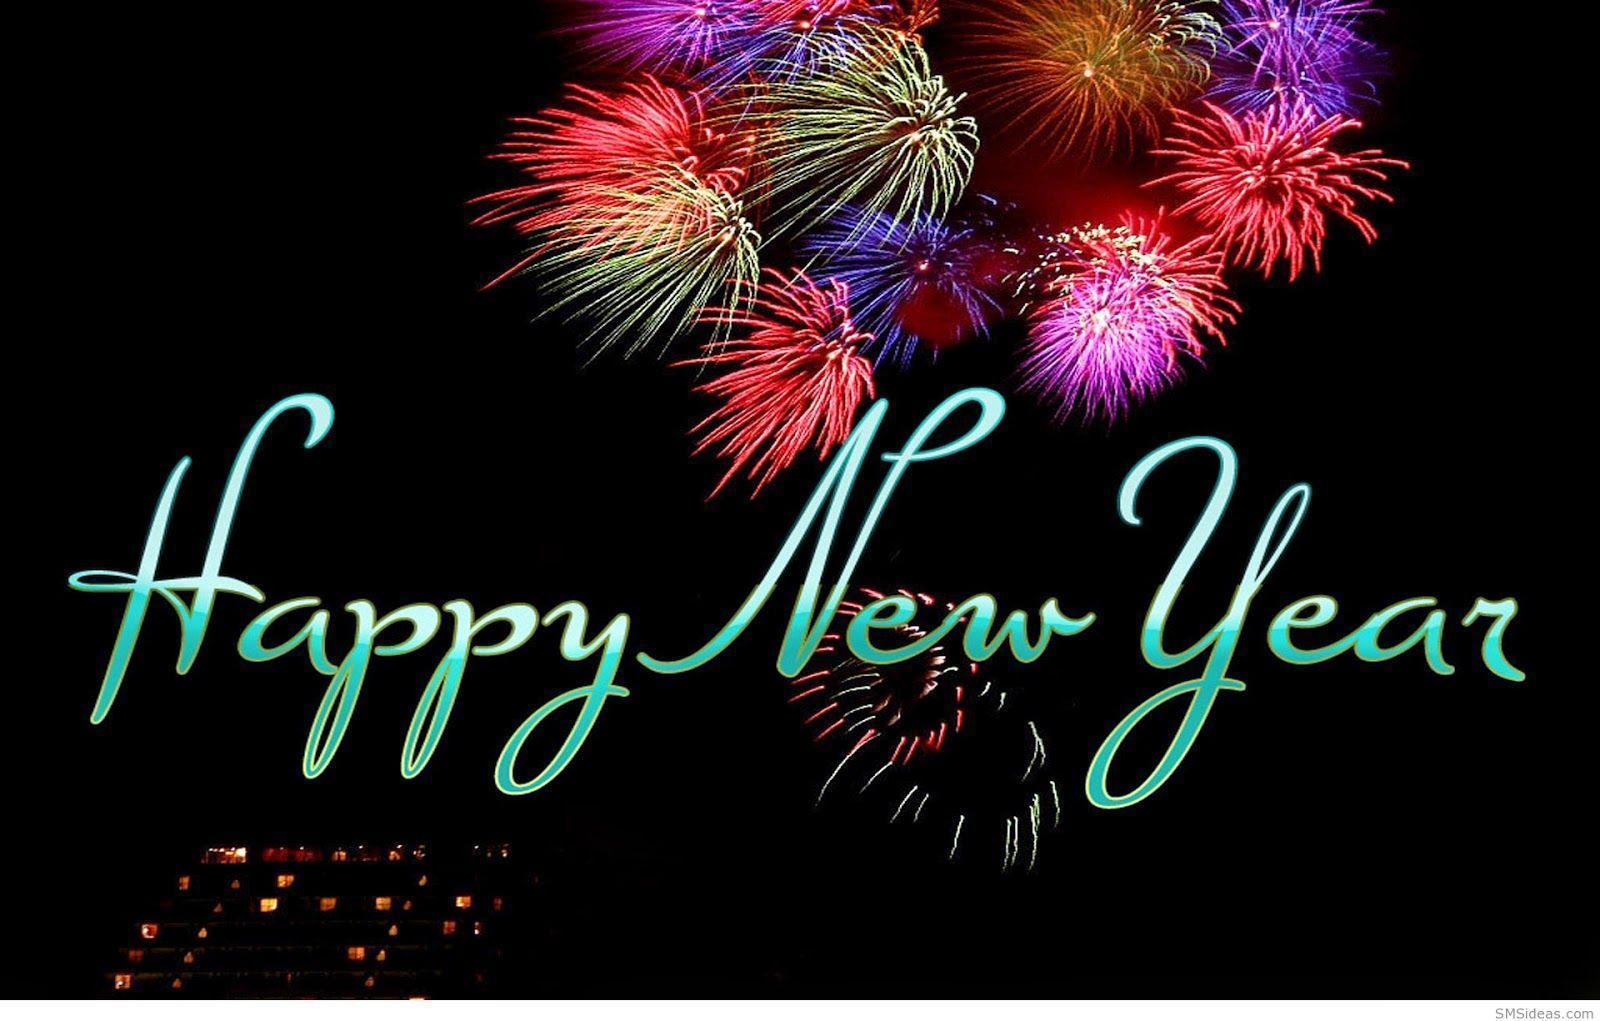 Happy New Year Greeting & HD Image, Wallpaper 2016